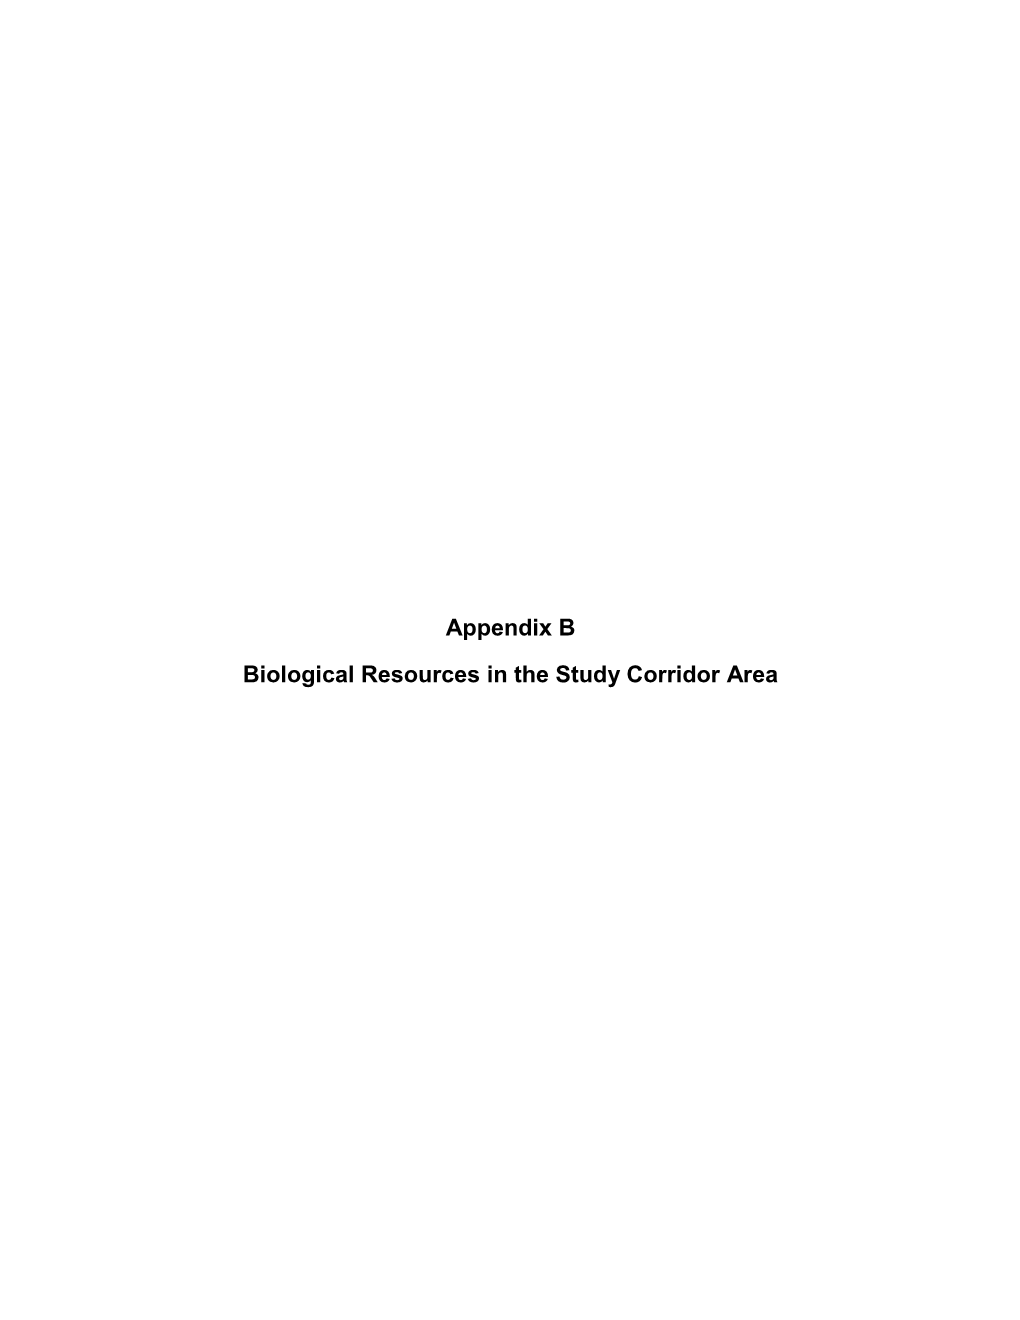 Appendix B Biological Resources in the Study Corridor Area